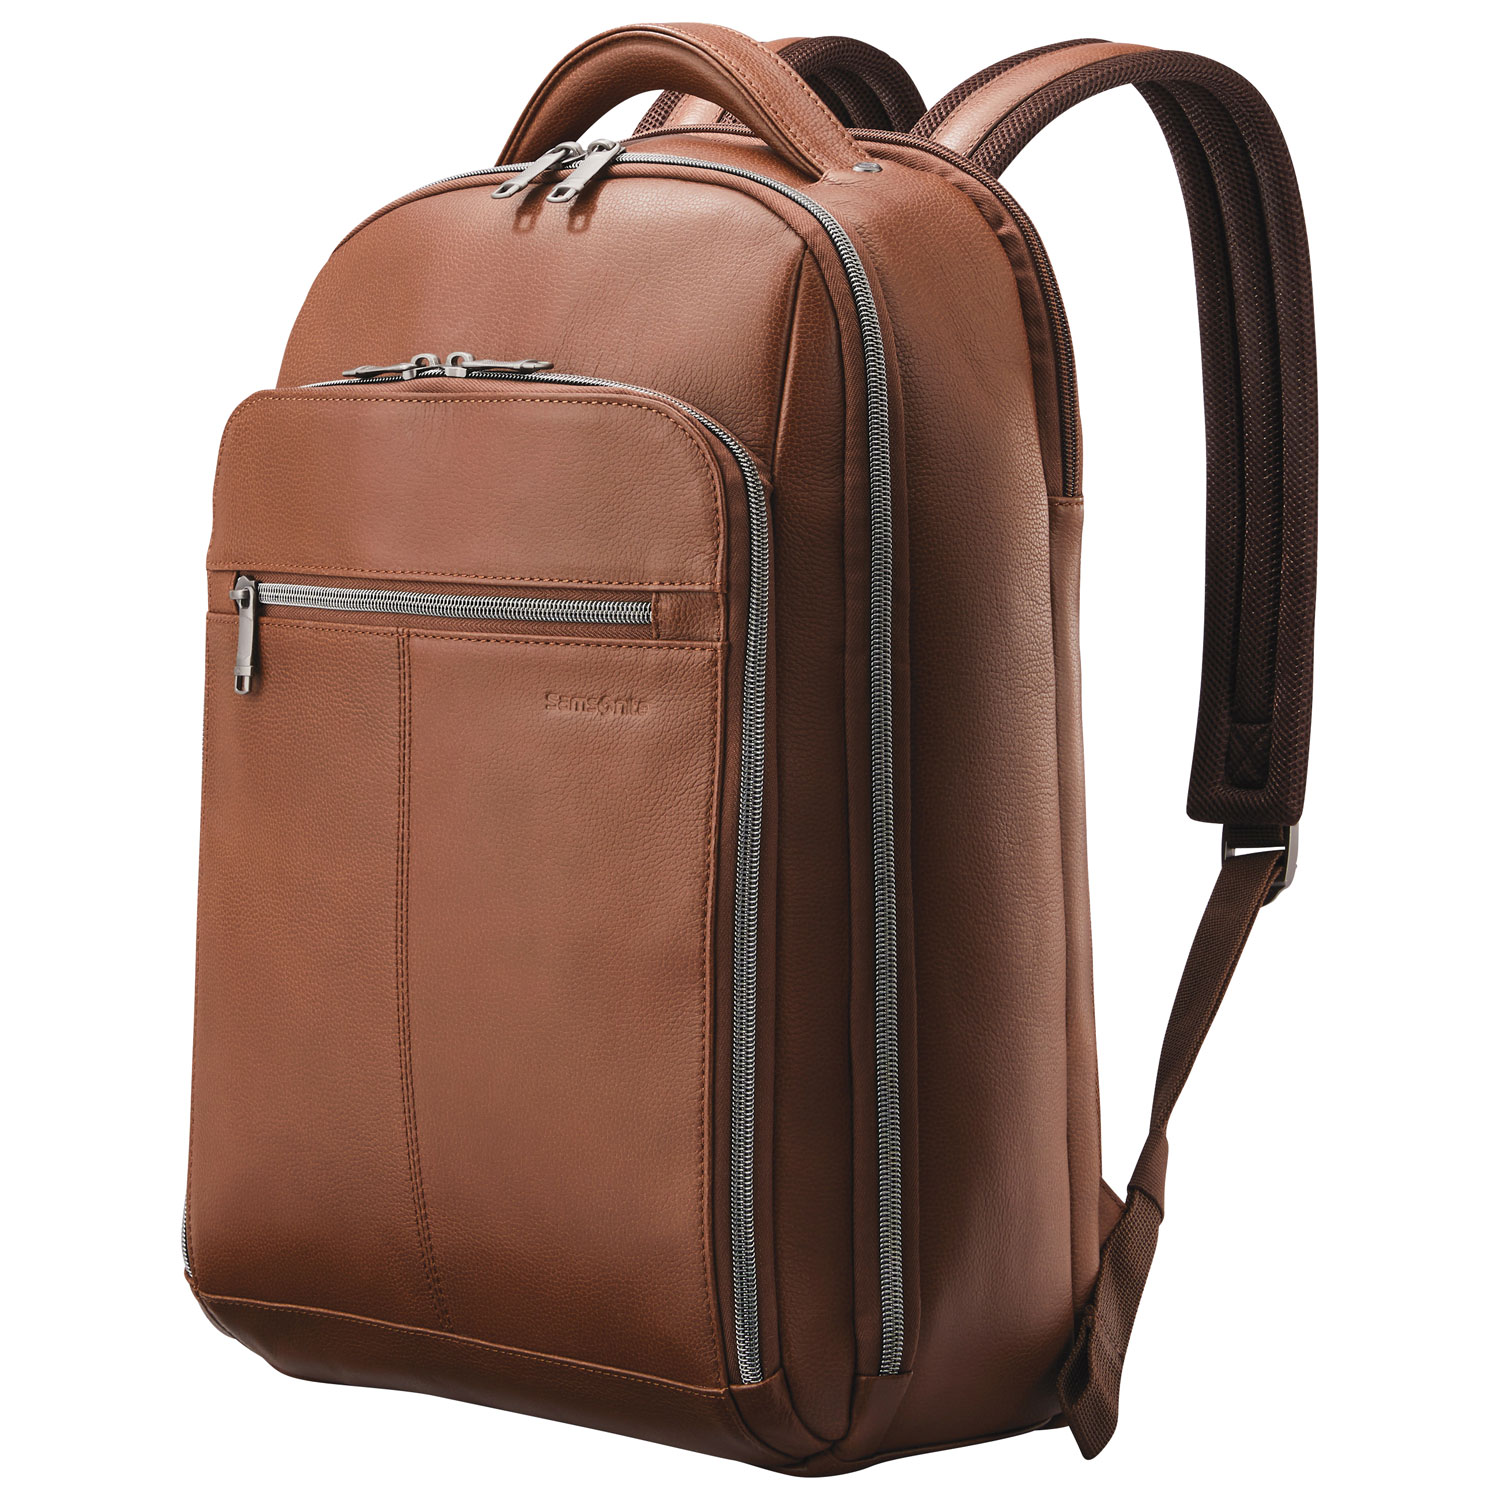 Samsonite Classic Leather 15.6" Laptop Commuter Backpack - Cognac